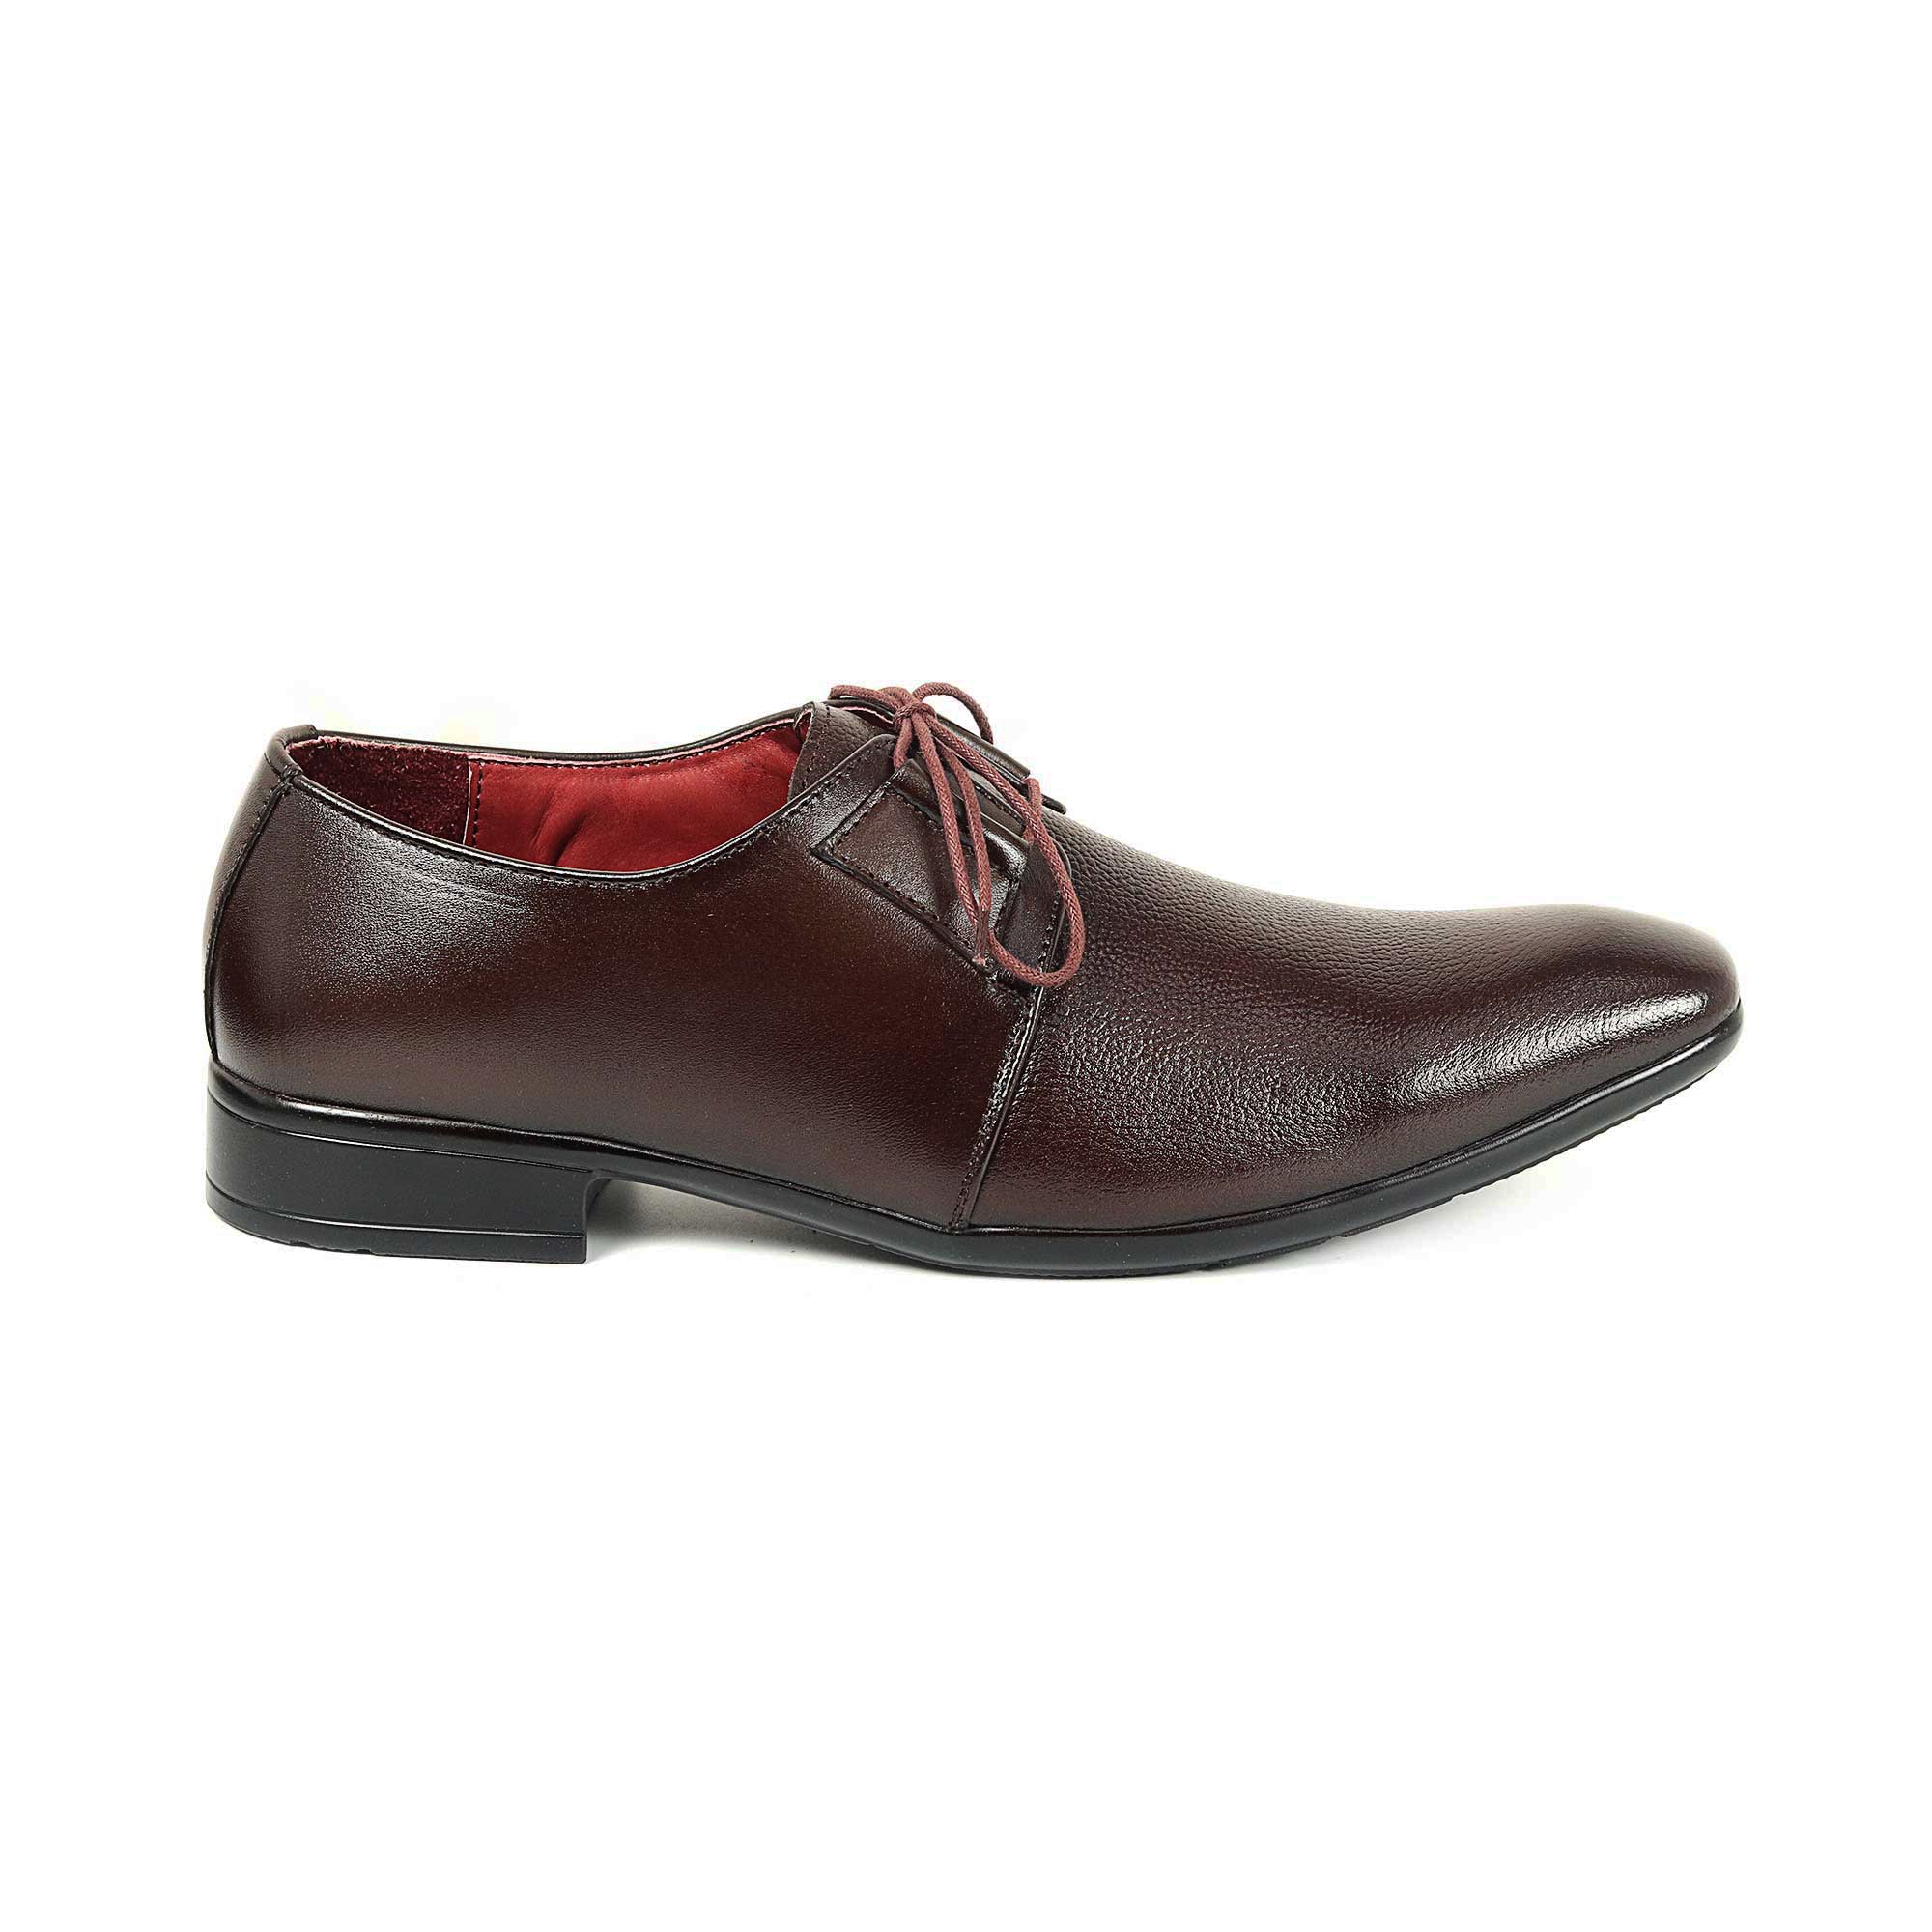 Zays Leather Premium Formal Shoe For Men (Chocolate) - ZAYSSF45